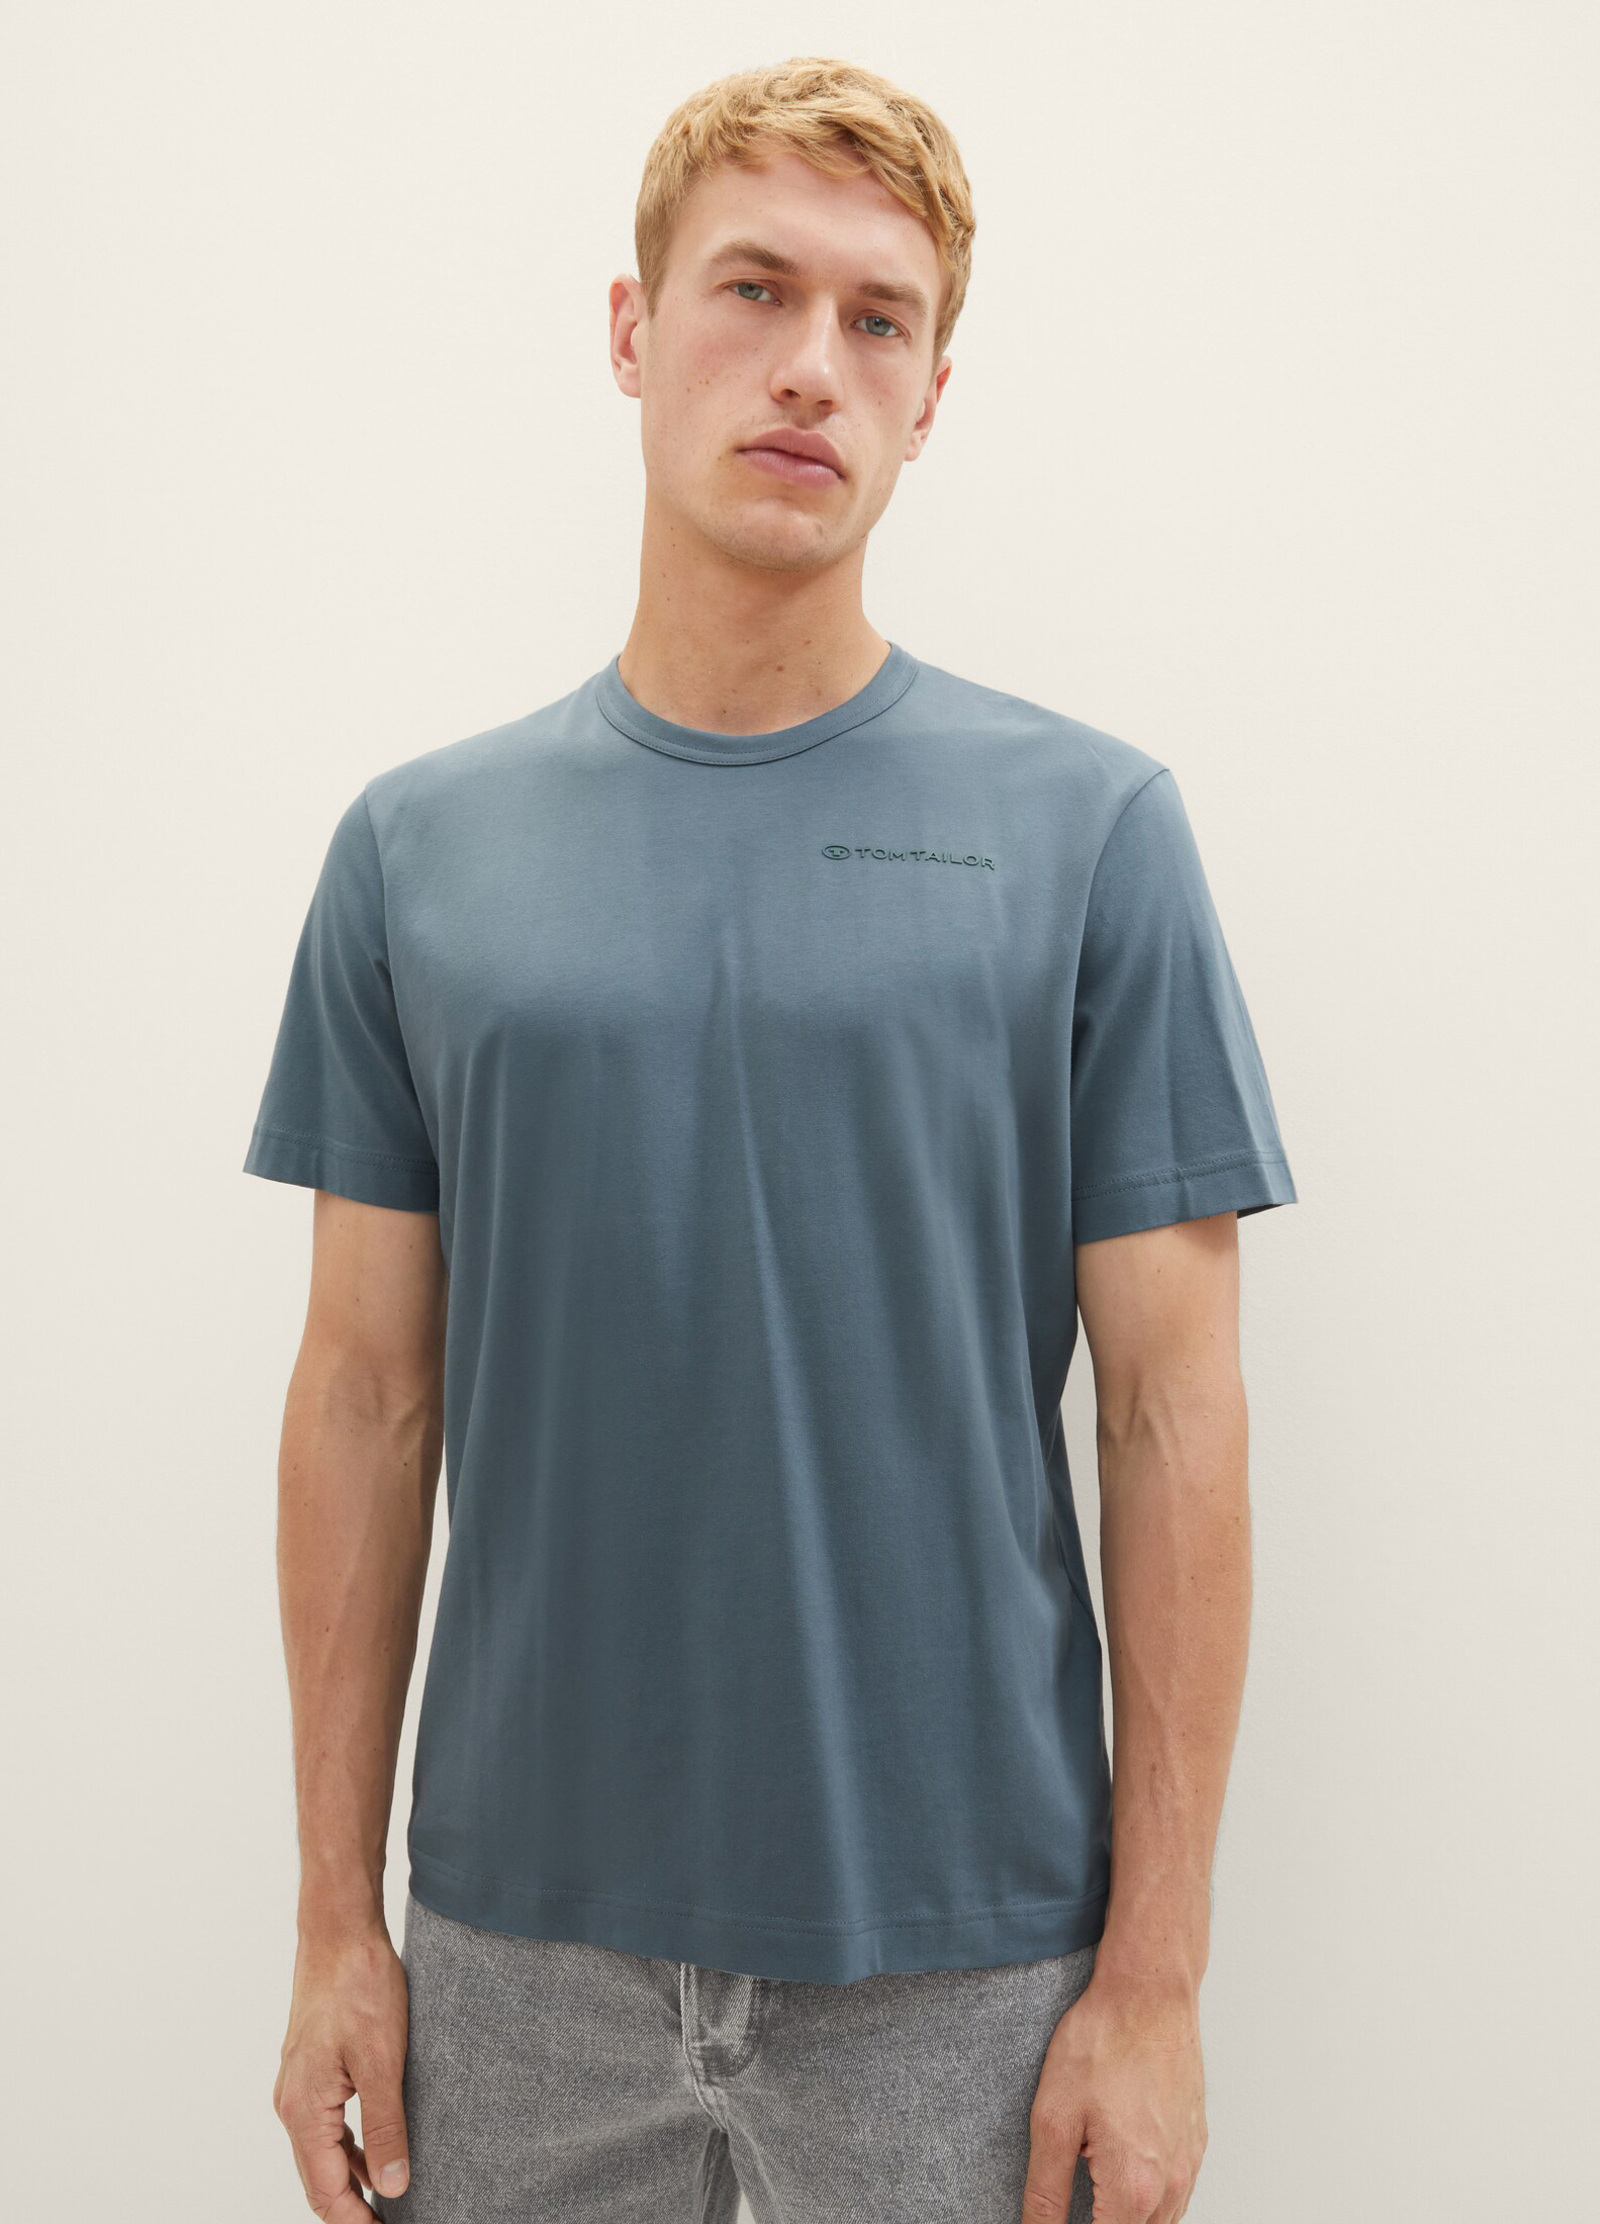 Tom Tailor® Basic T-shirt Teal Size L - Dusty Dark